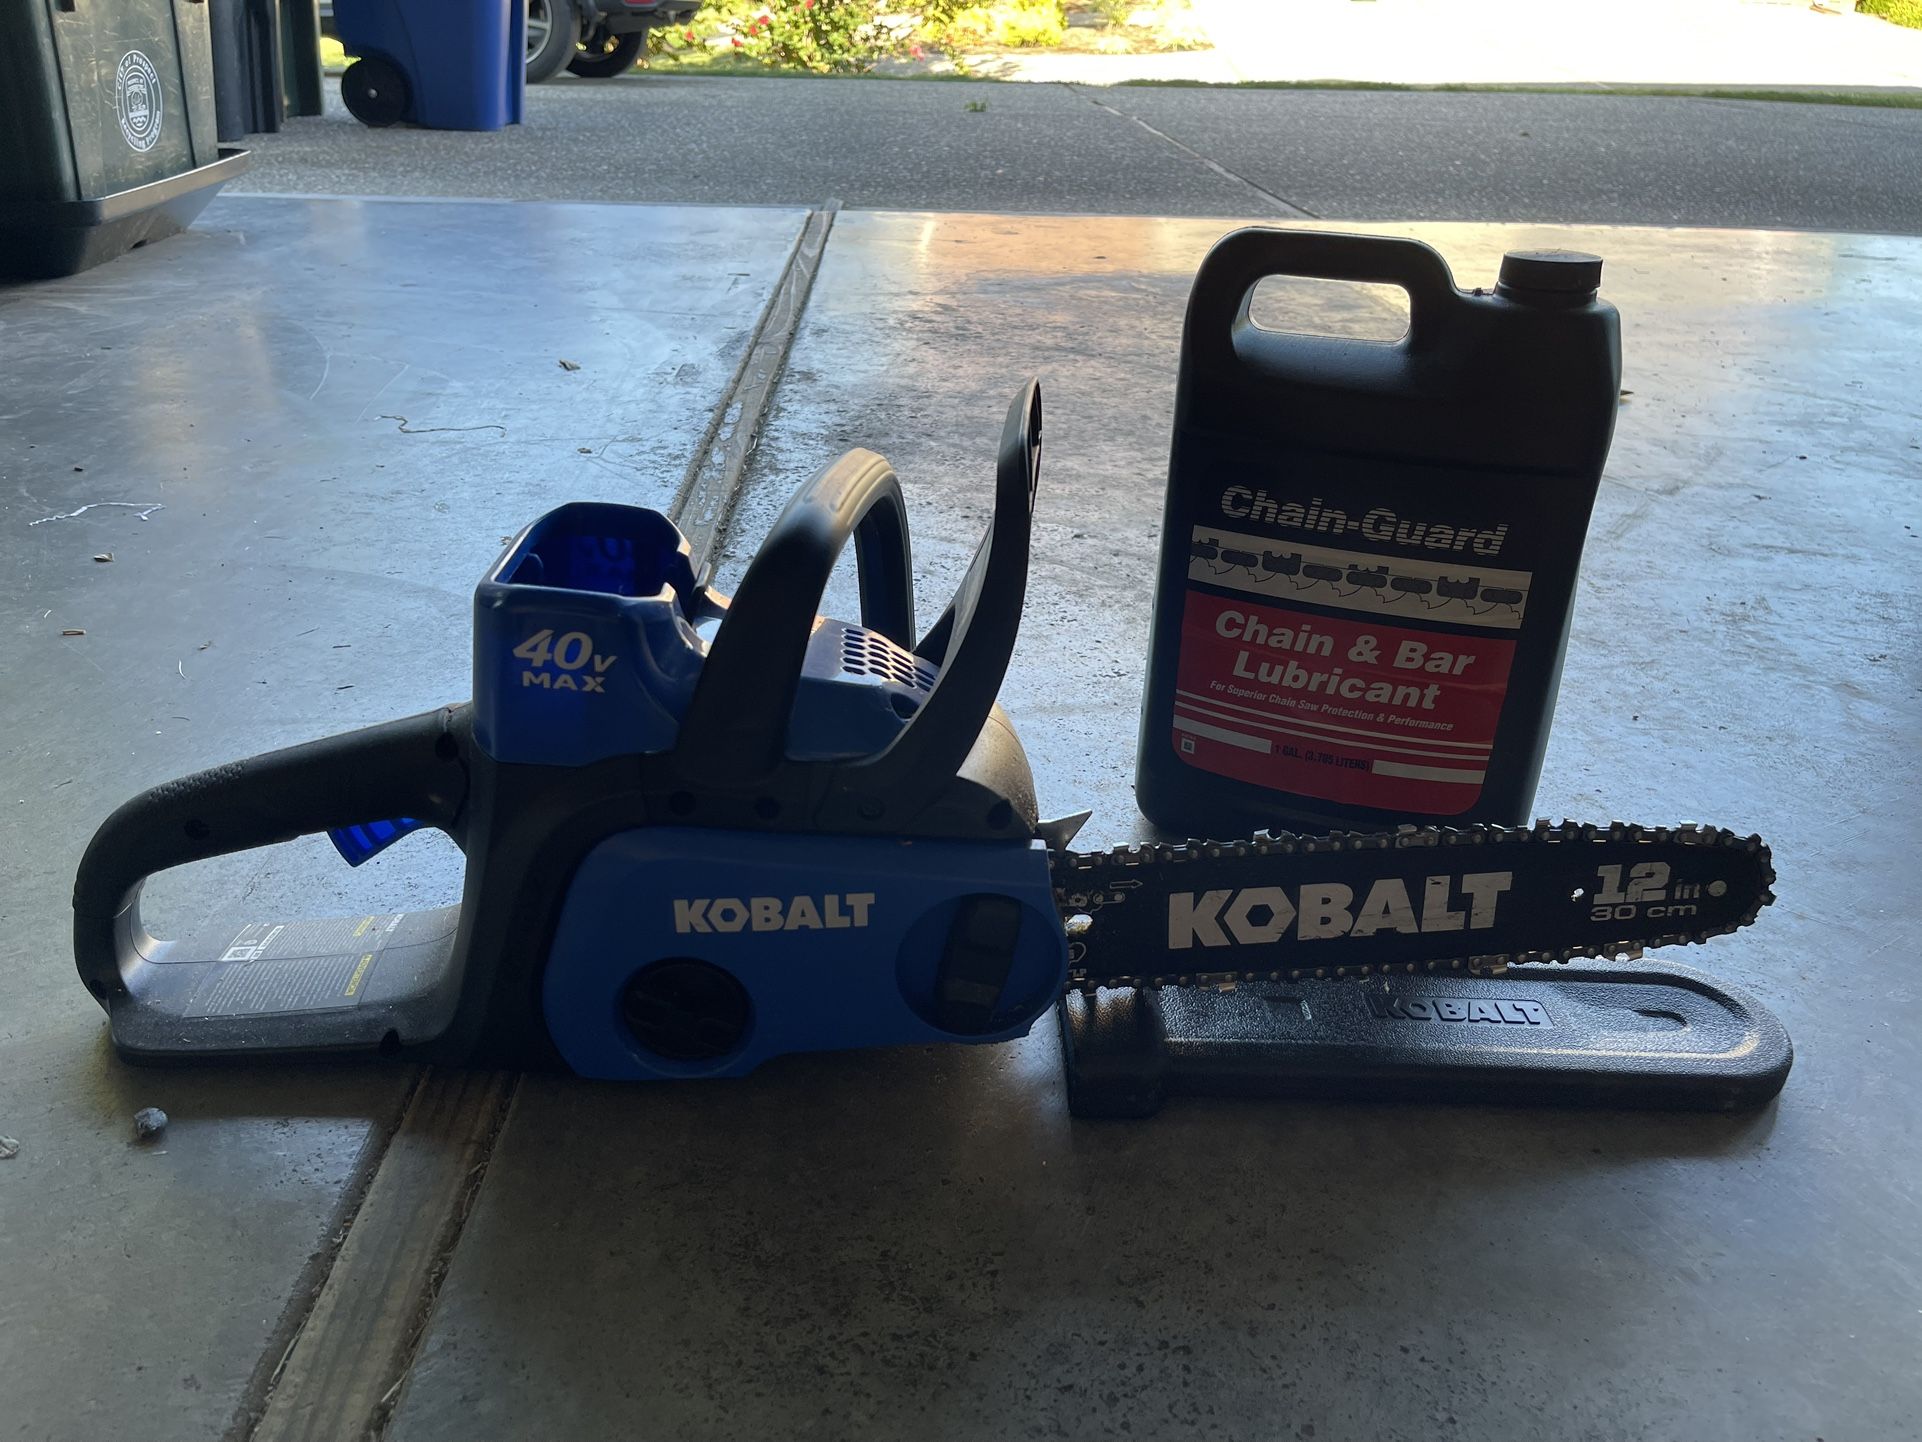 Kobalt Chainsaw W/ Chain Lubricant